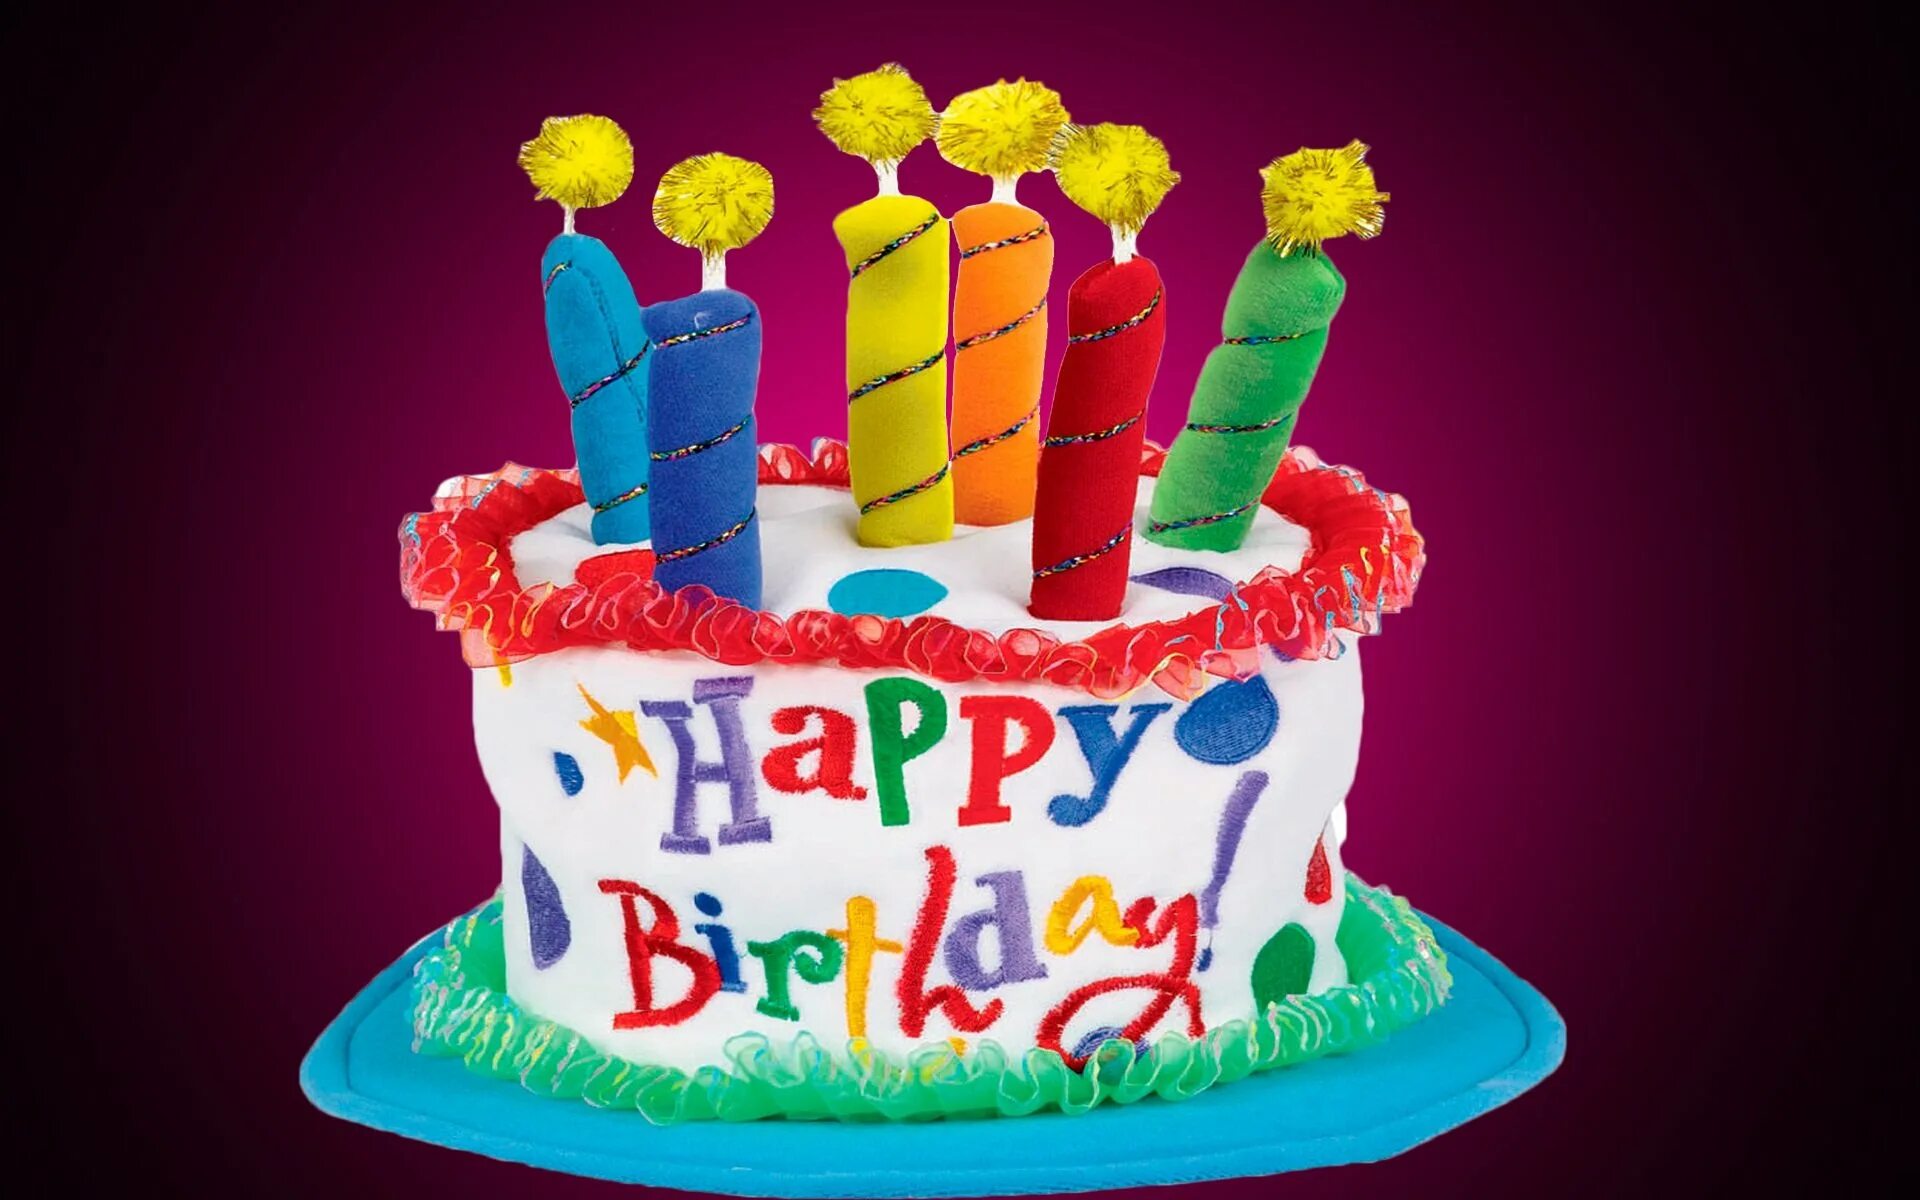 This is my cake. Торт с днем рождения!. Торт с днём рождения картинки. Свеча в торт "с днем рождения". Торт со свечками.